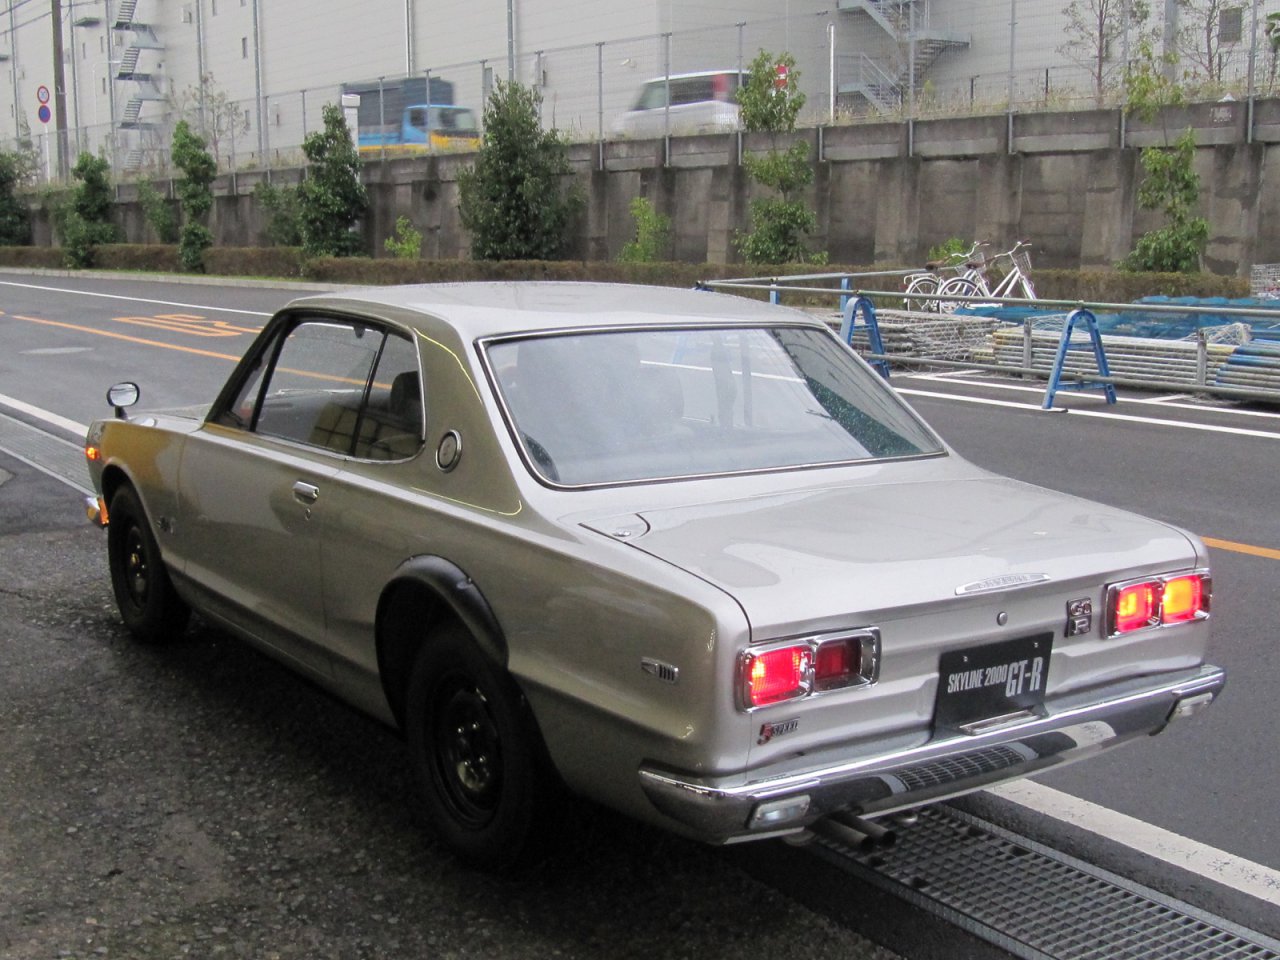 1972 Nissan Skyline 2000 GT-R coupe, Nissan Heritage garage, Zama, Japan